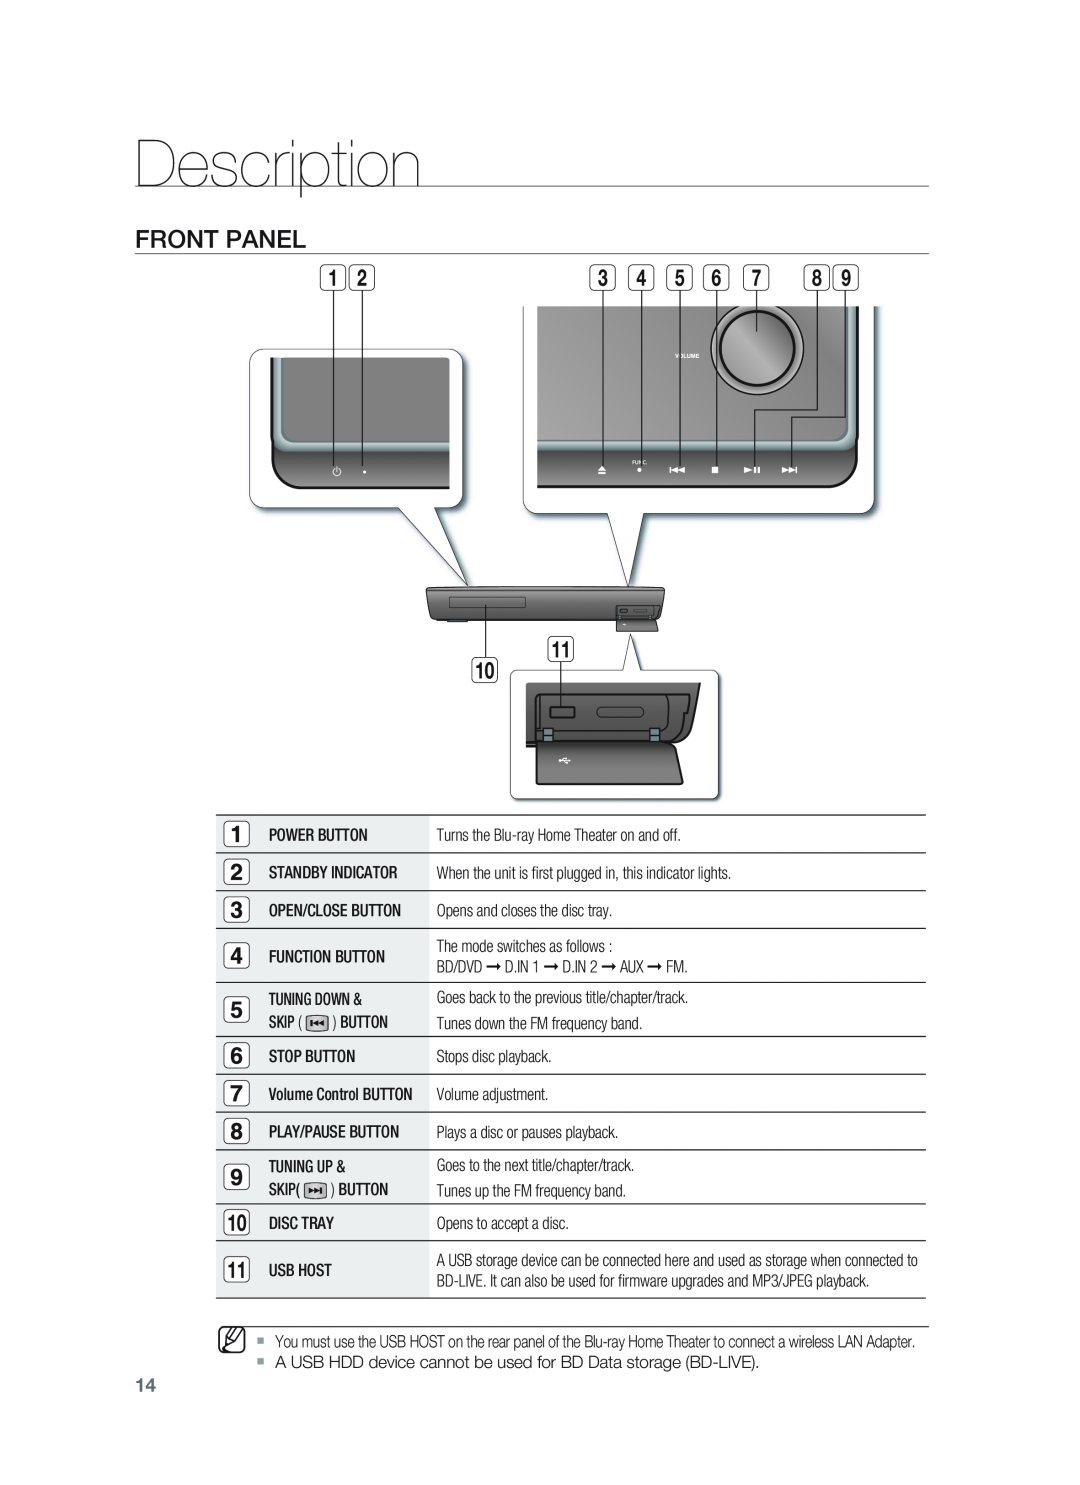 Samsung HT-BD1255, HT-BD1252 user manual Description, Front Panel, 11 10 